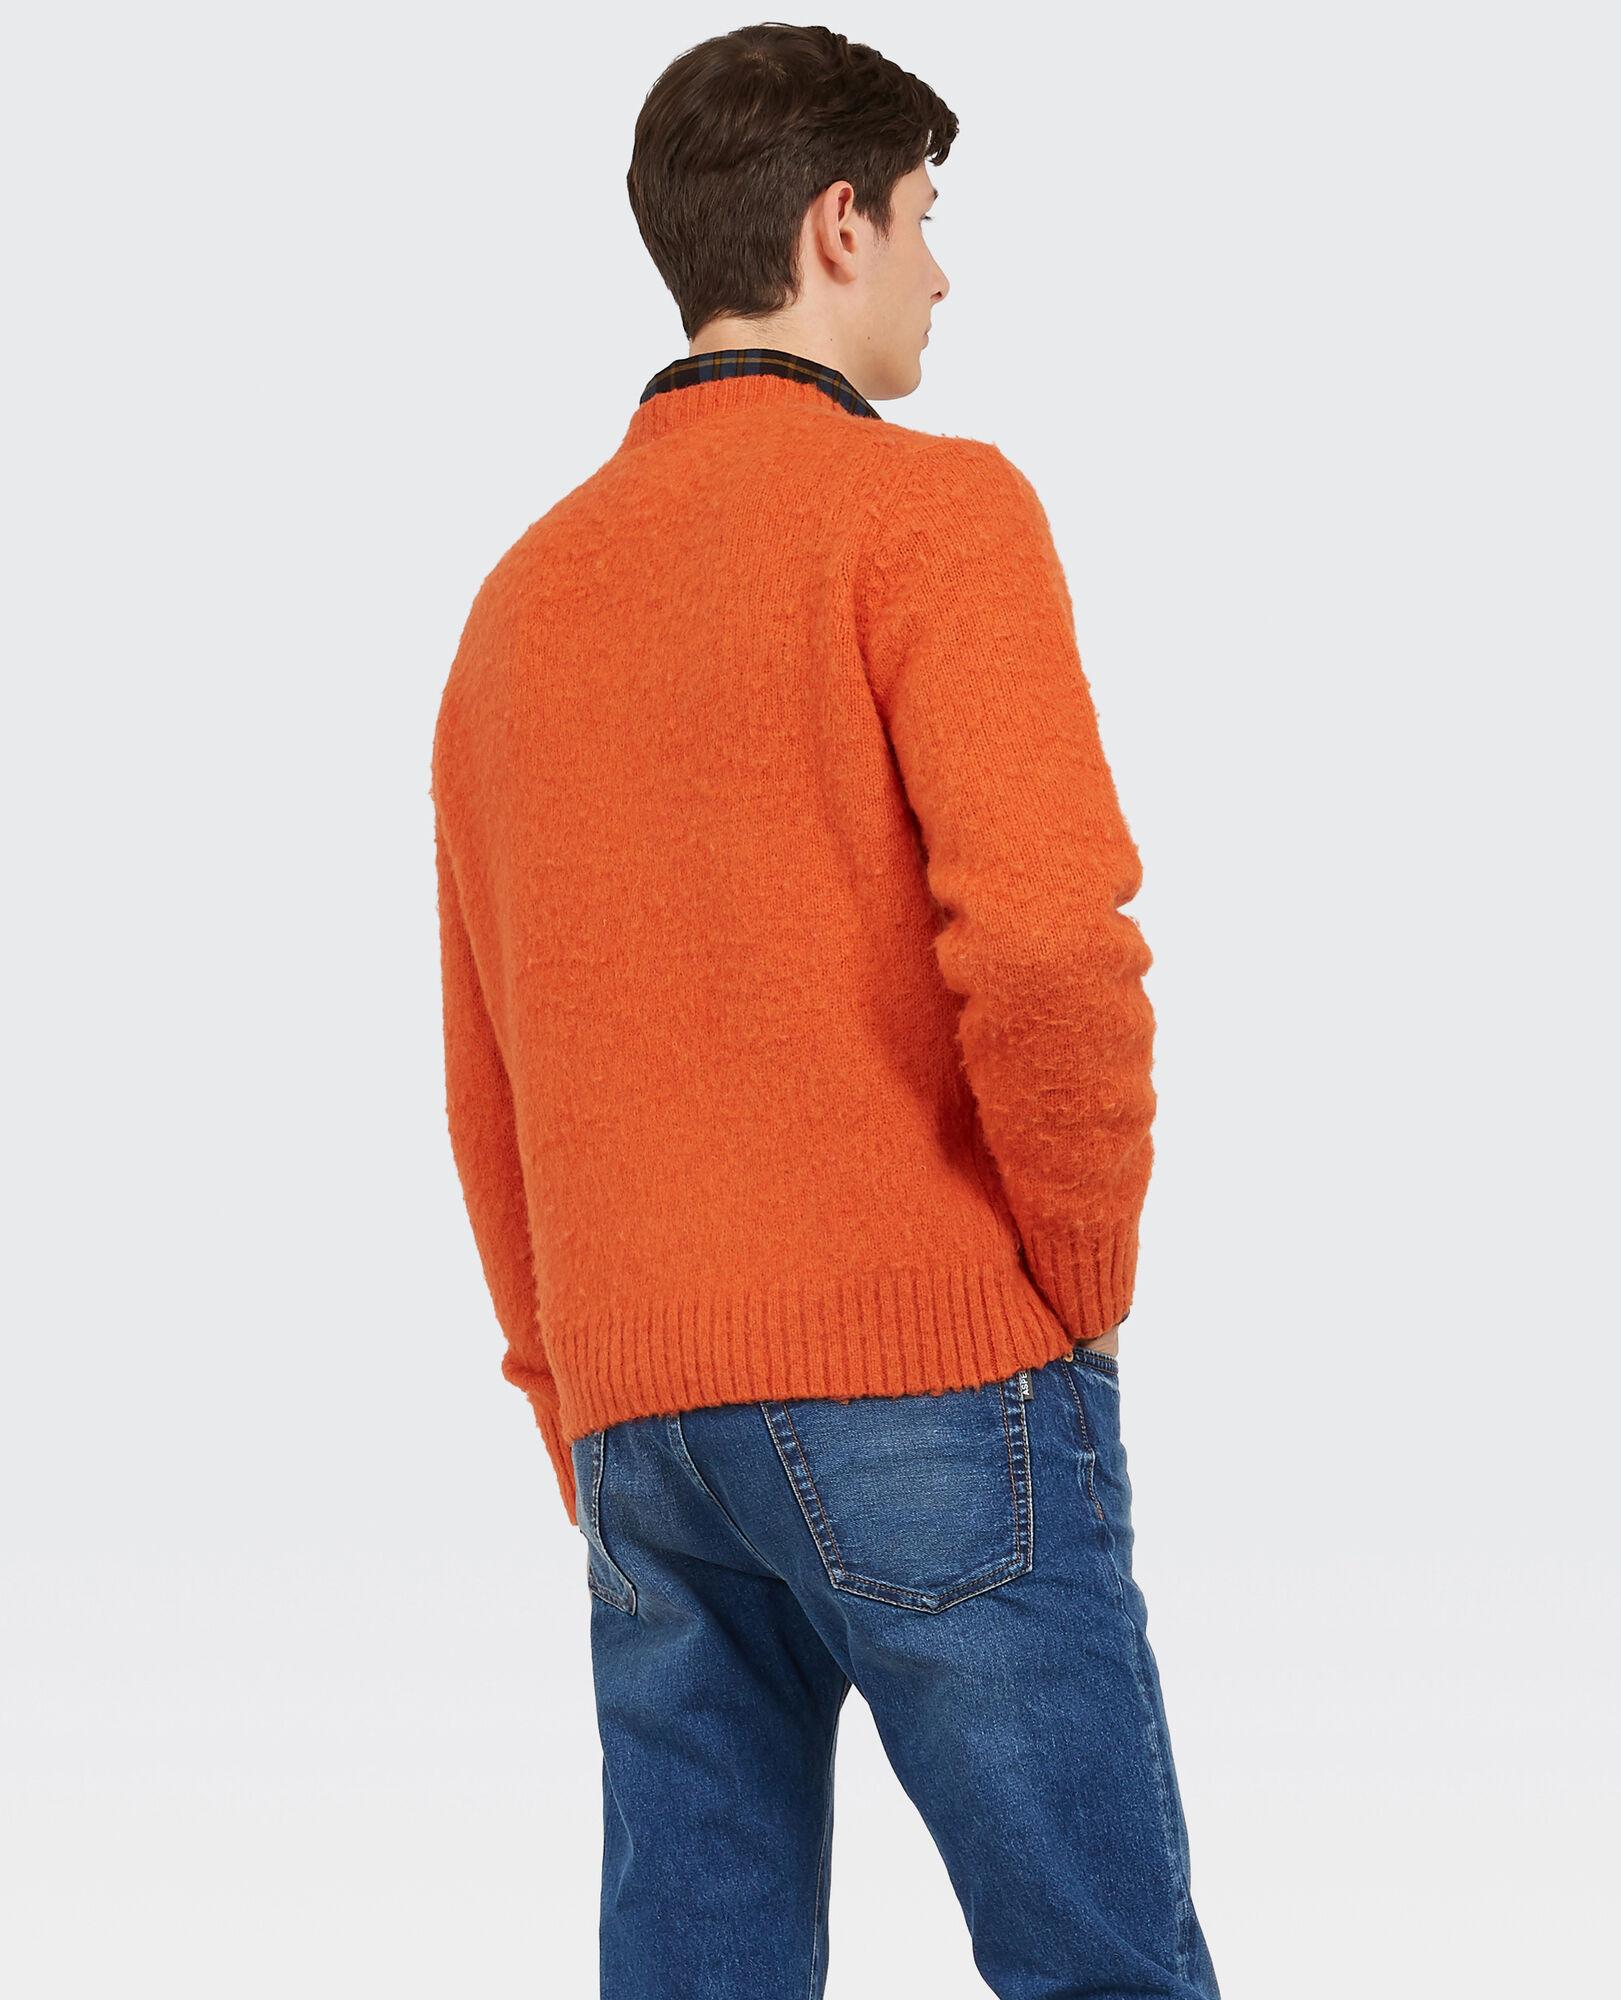 Aspesi Crew-neck Sweater In Brushed Shetland Wool in Orange for Men - Lyst